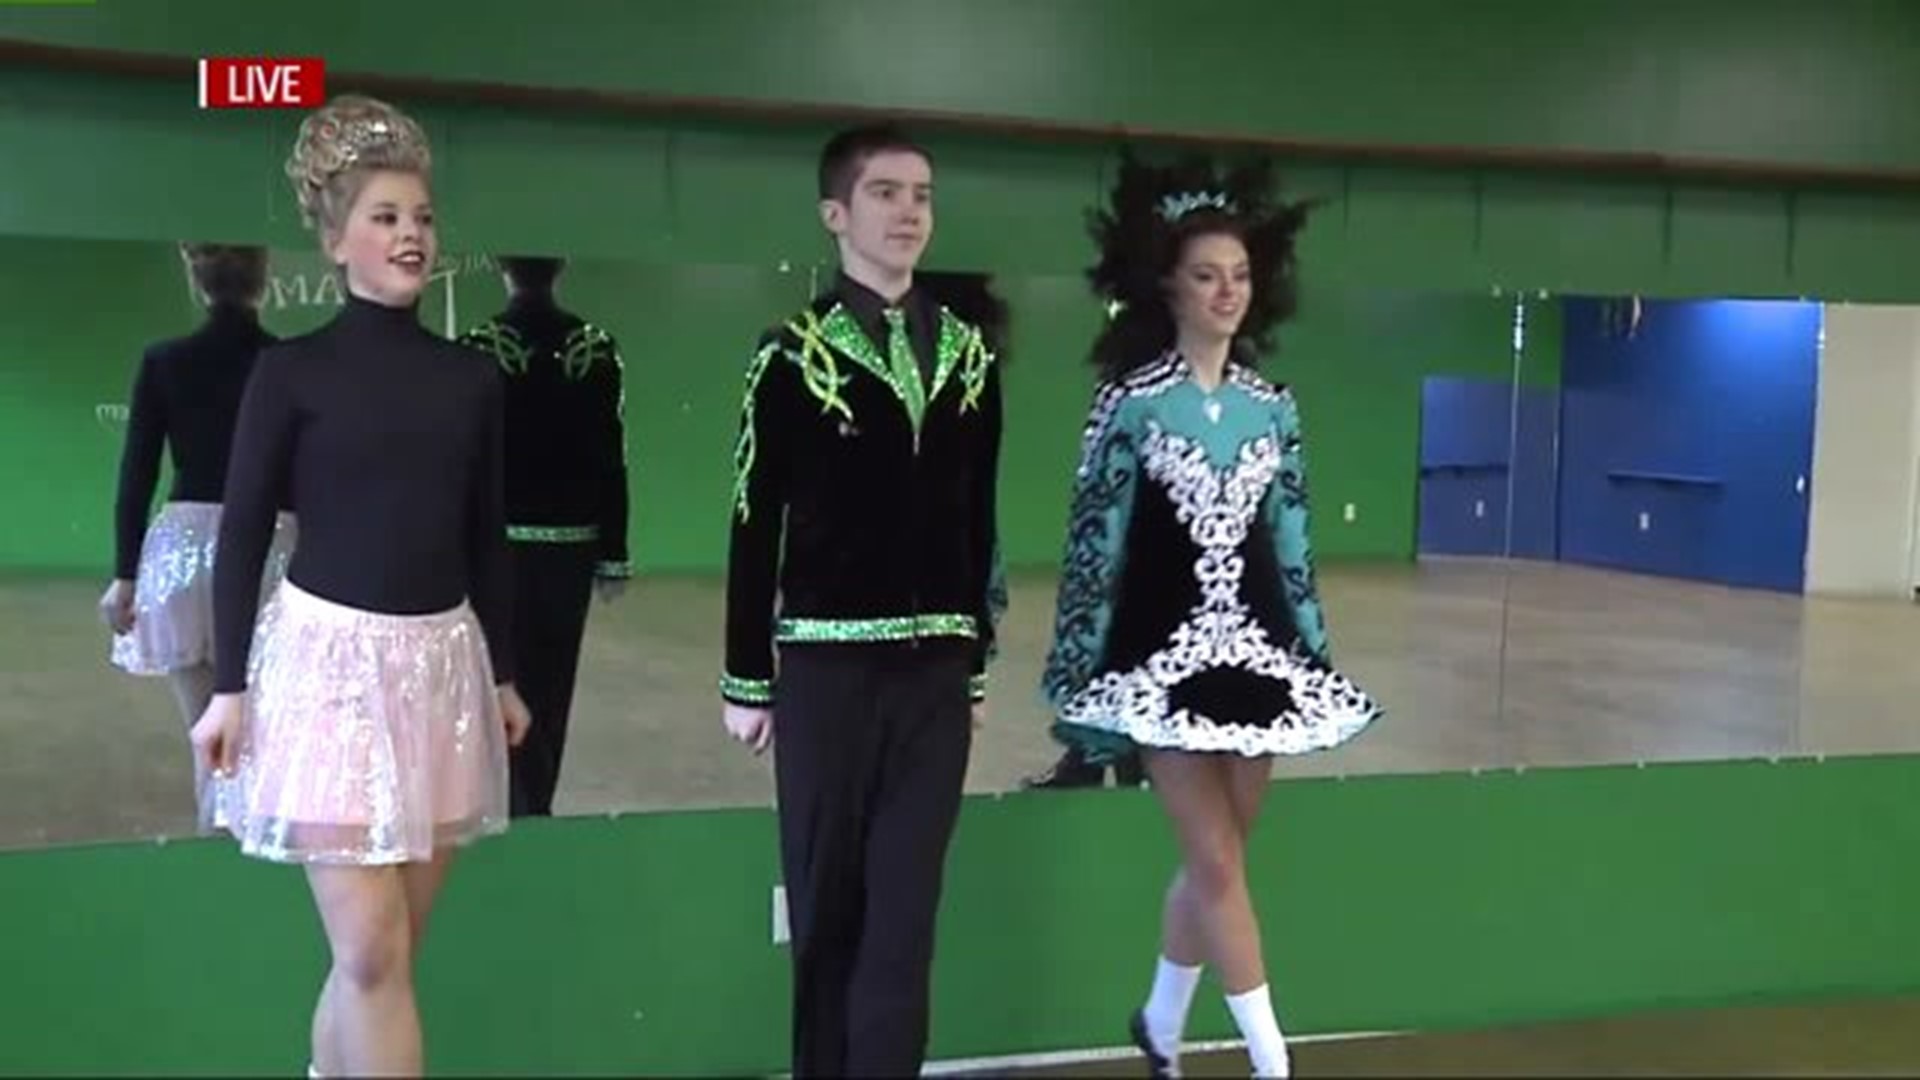 Irish dancing with the Hooley Irish Dancers